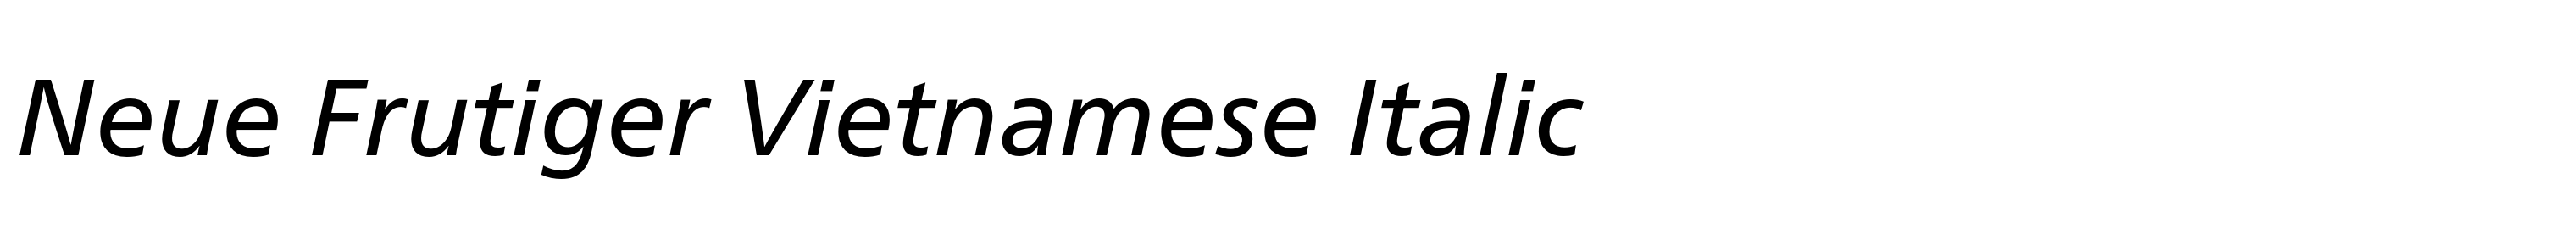 Neue Frutiger Vietnamese Italic